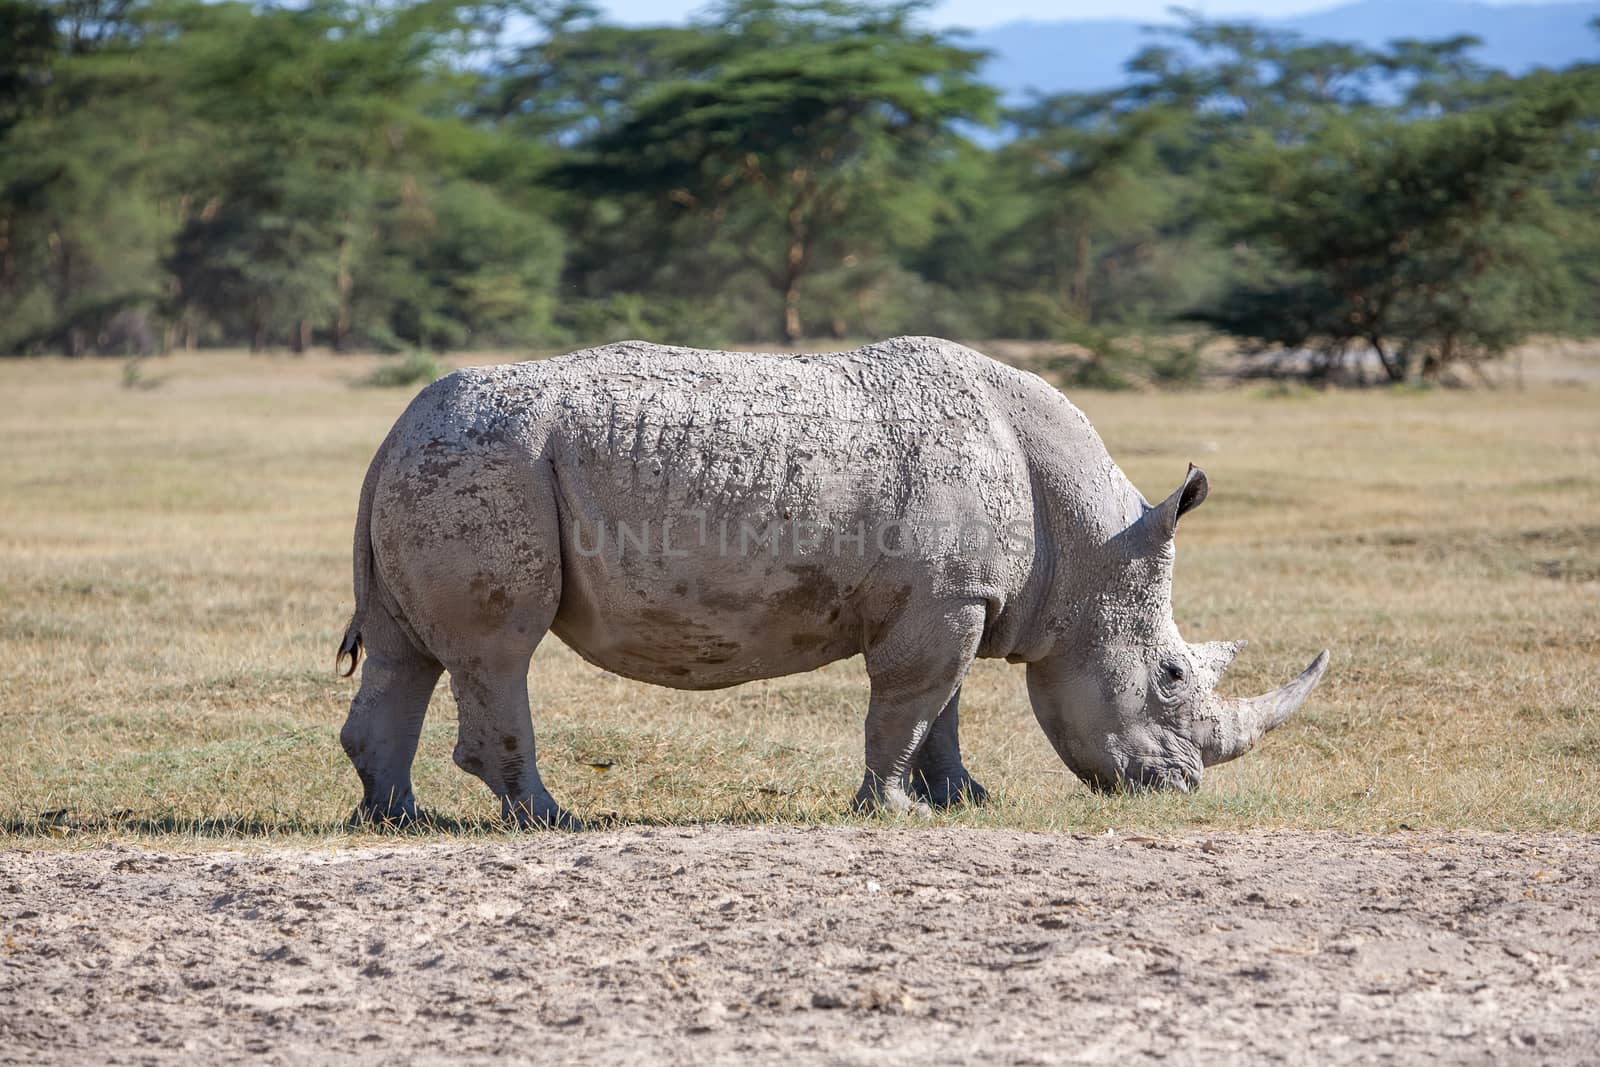 Safari - rhino on the background of savanna